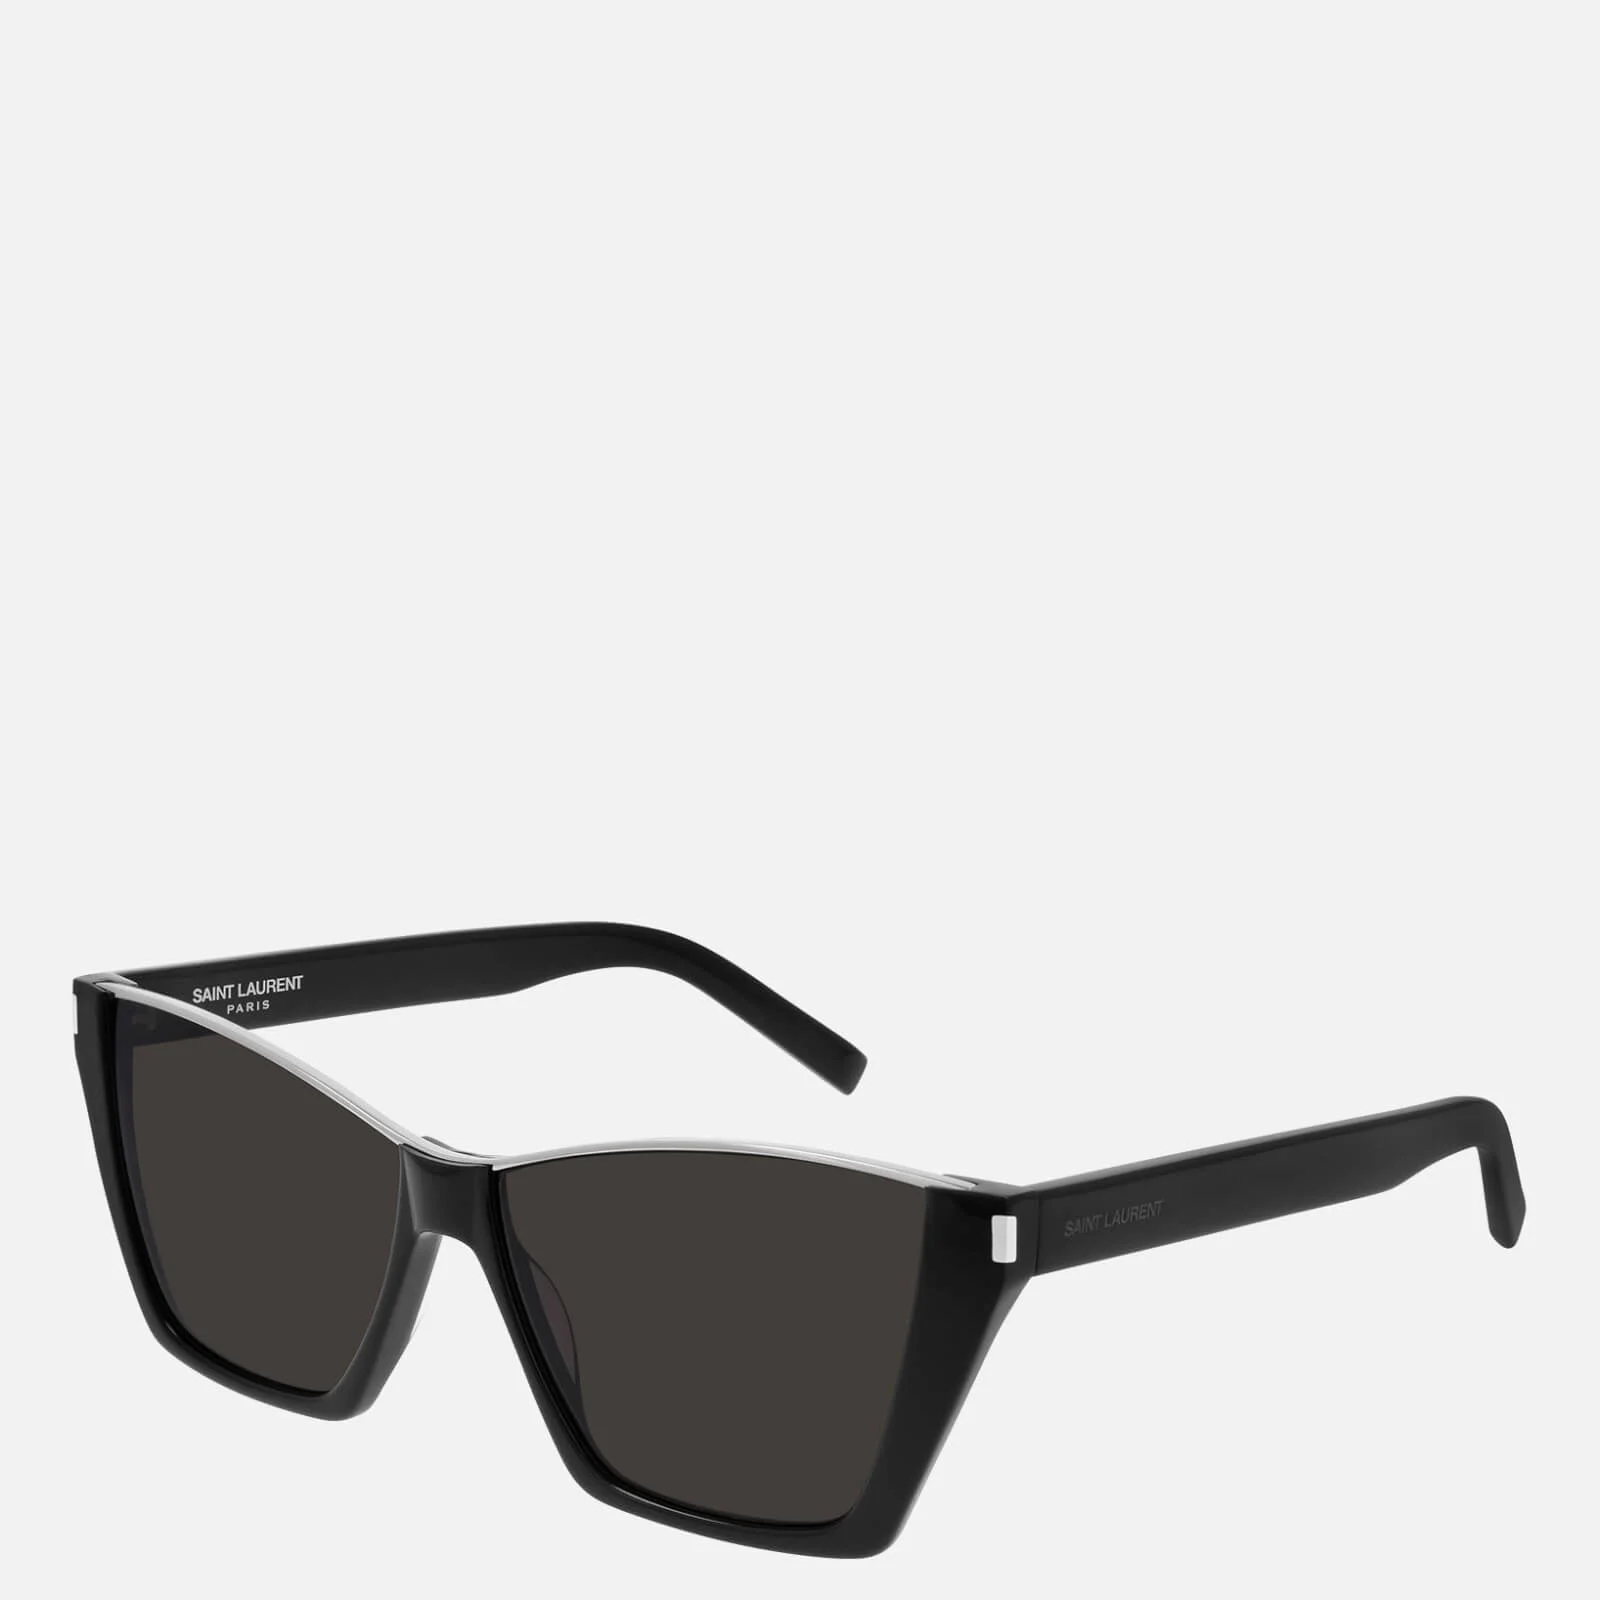 Saint Laurent Women's Kate Cat Eye Sunglasses - Black Image 1